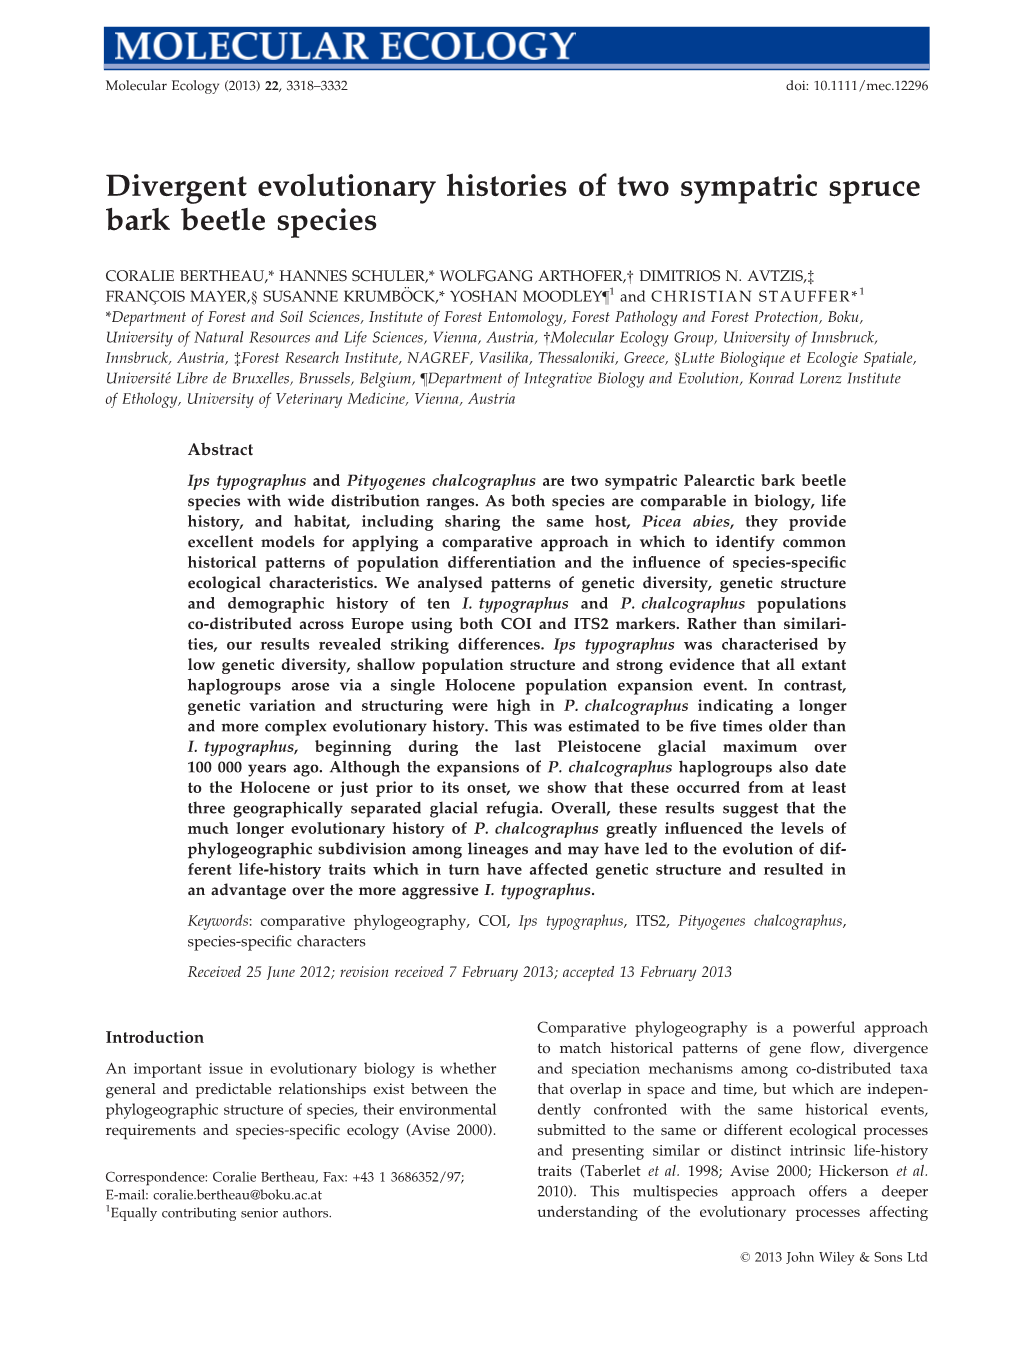 Divergent Evolutionary Histories of Two Sympatric Spruce Bark Beetle Species